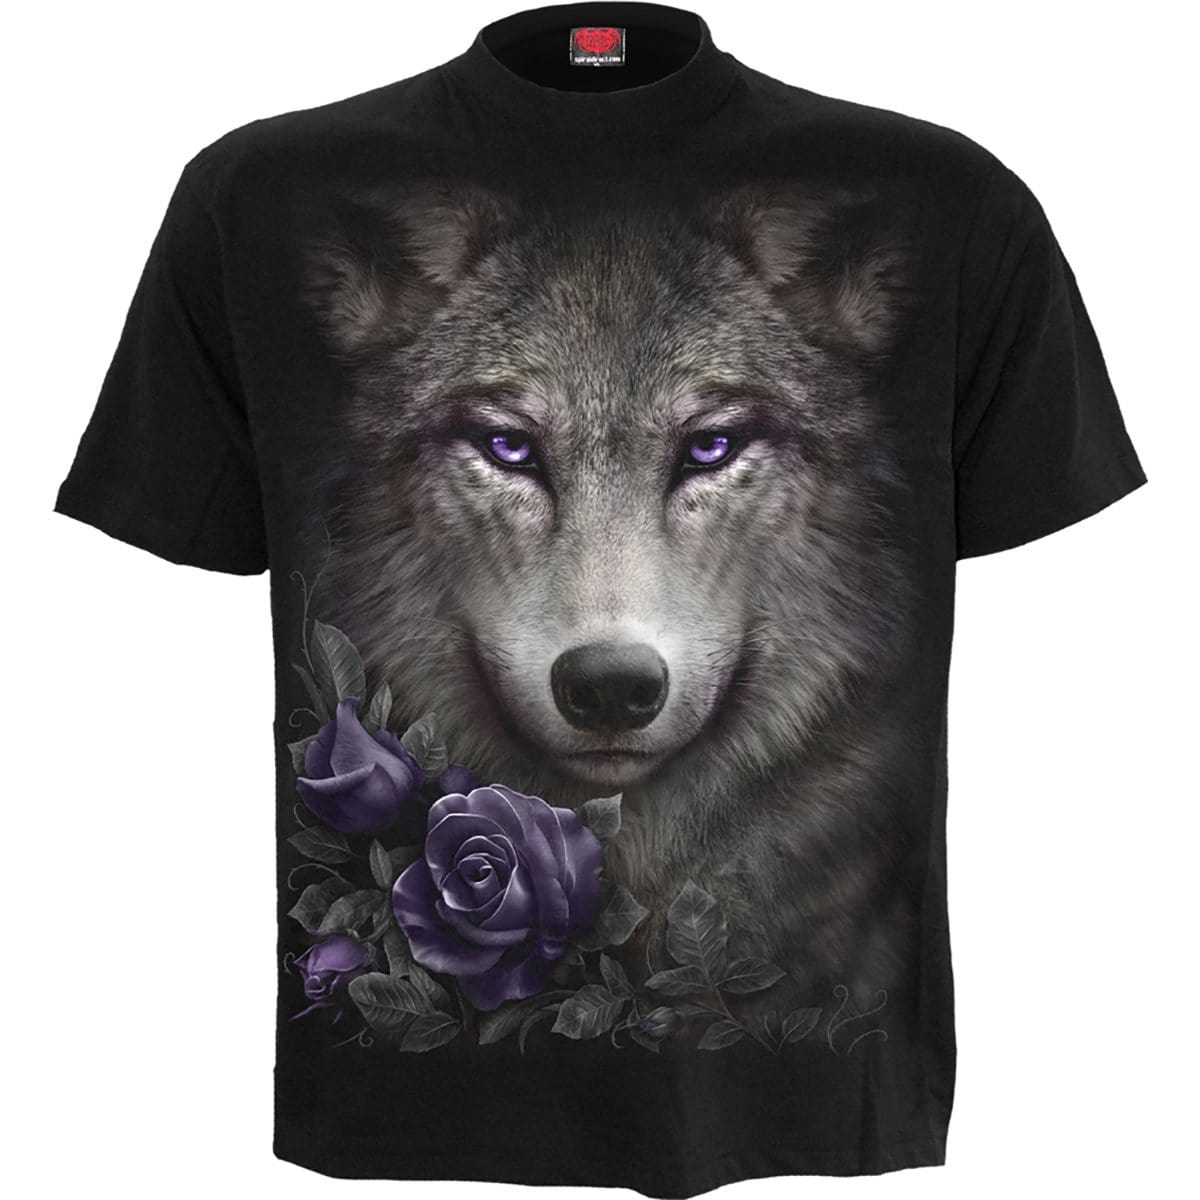 WOLF ROSES - Front Print T-Shirt Black - Spiral USA